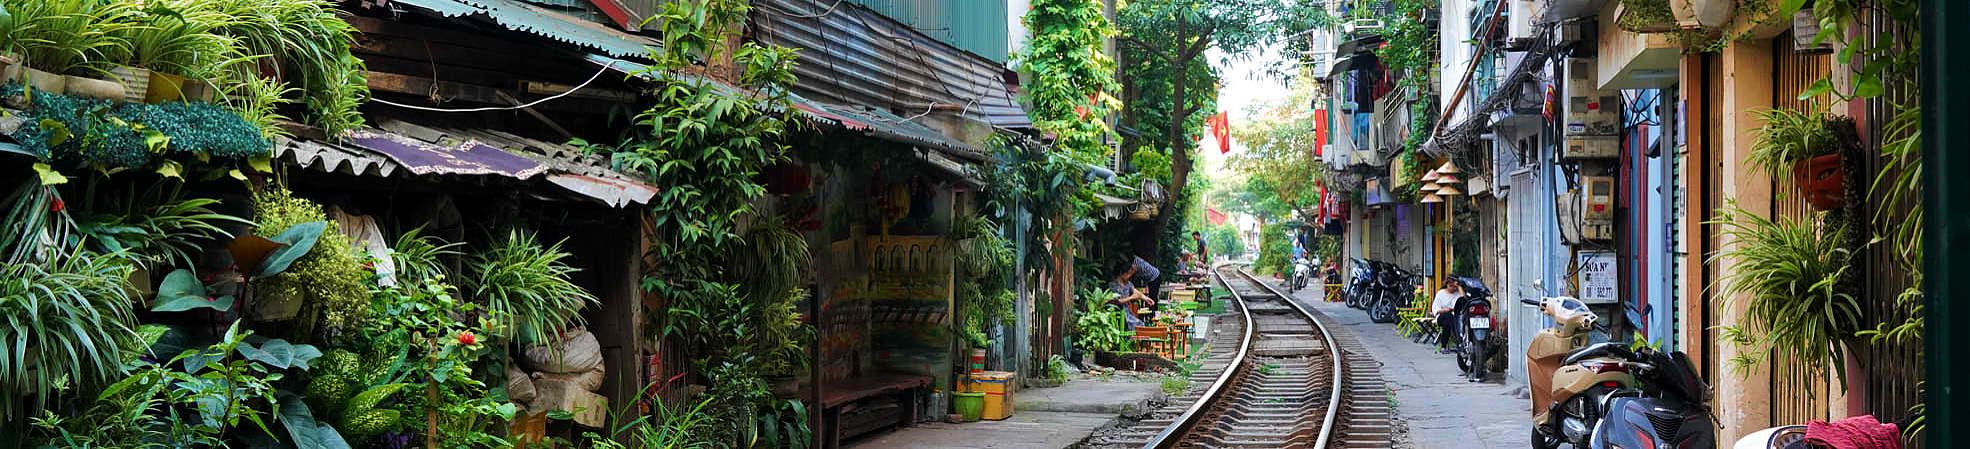 Train Street in Hanoi